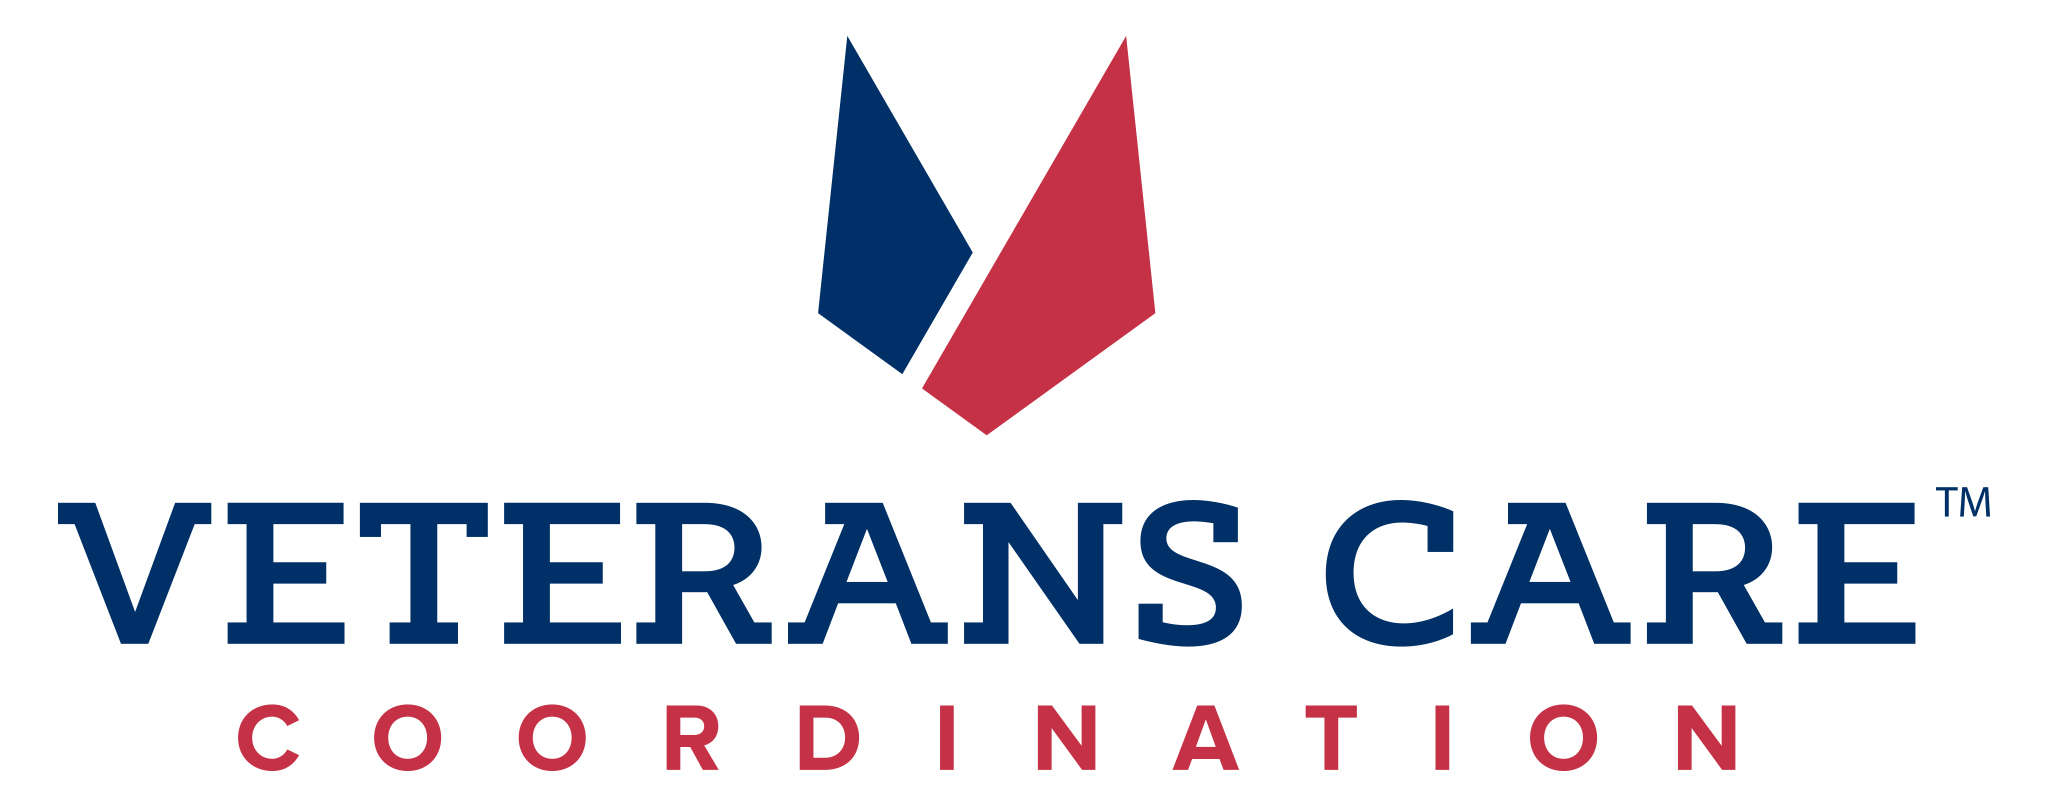 Veterans Care Coordination Logo